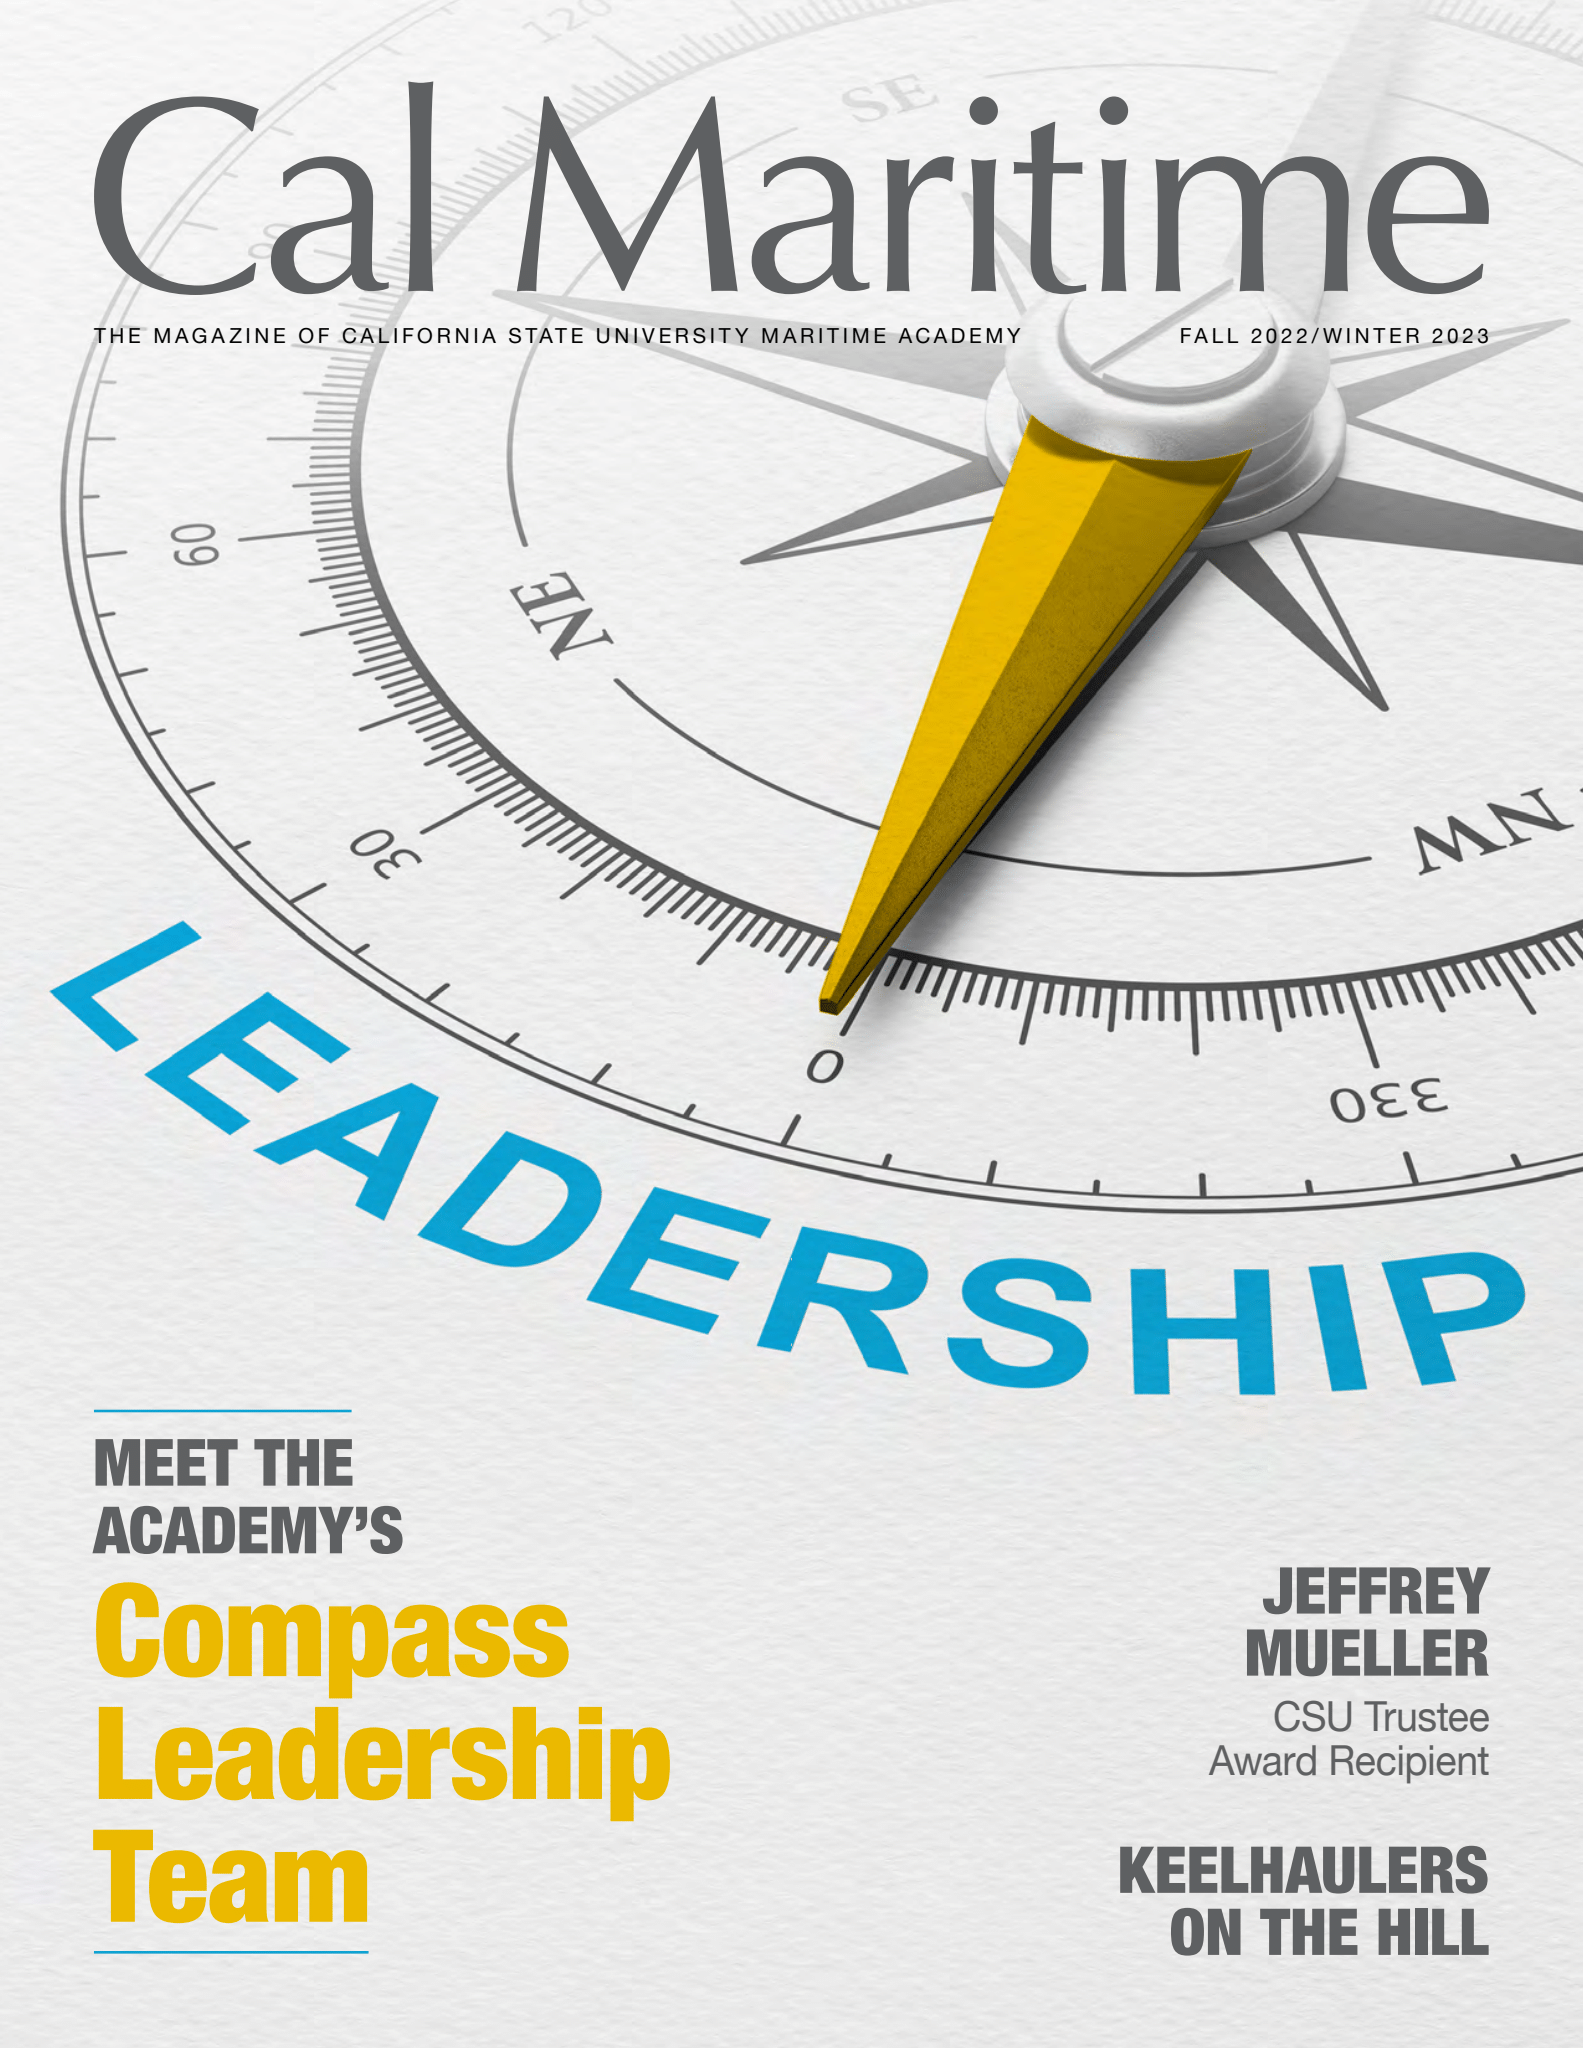 Cal Maritime Magazine Fall 2022/Winter 2023